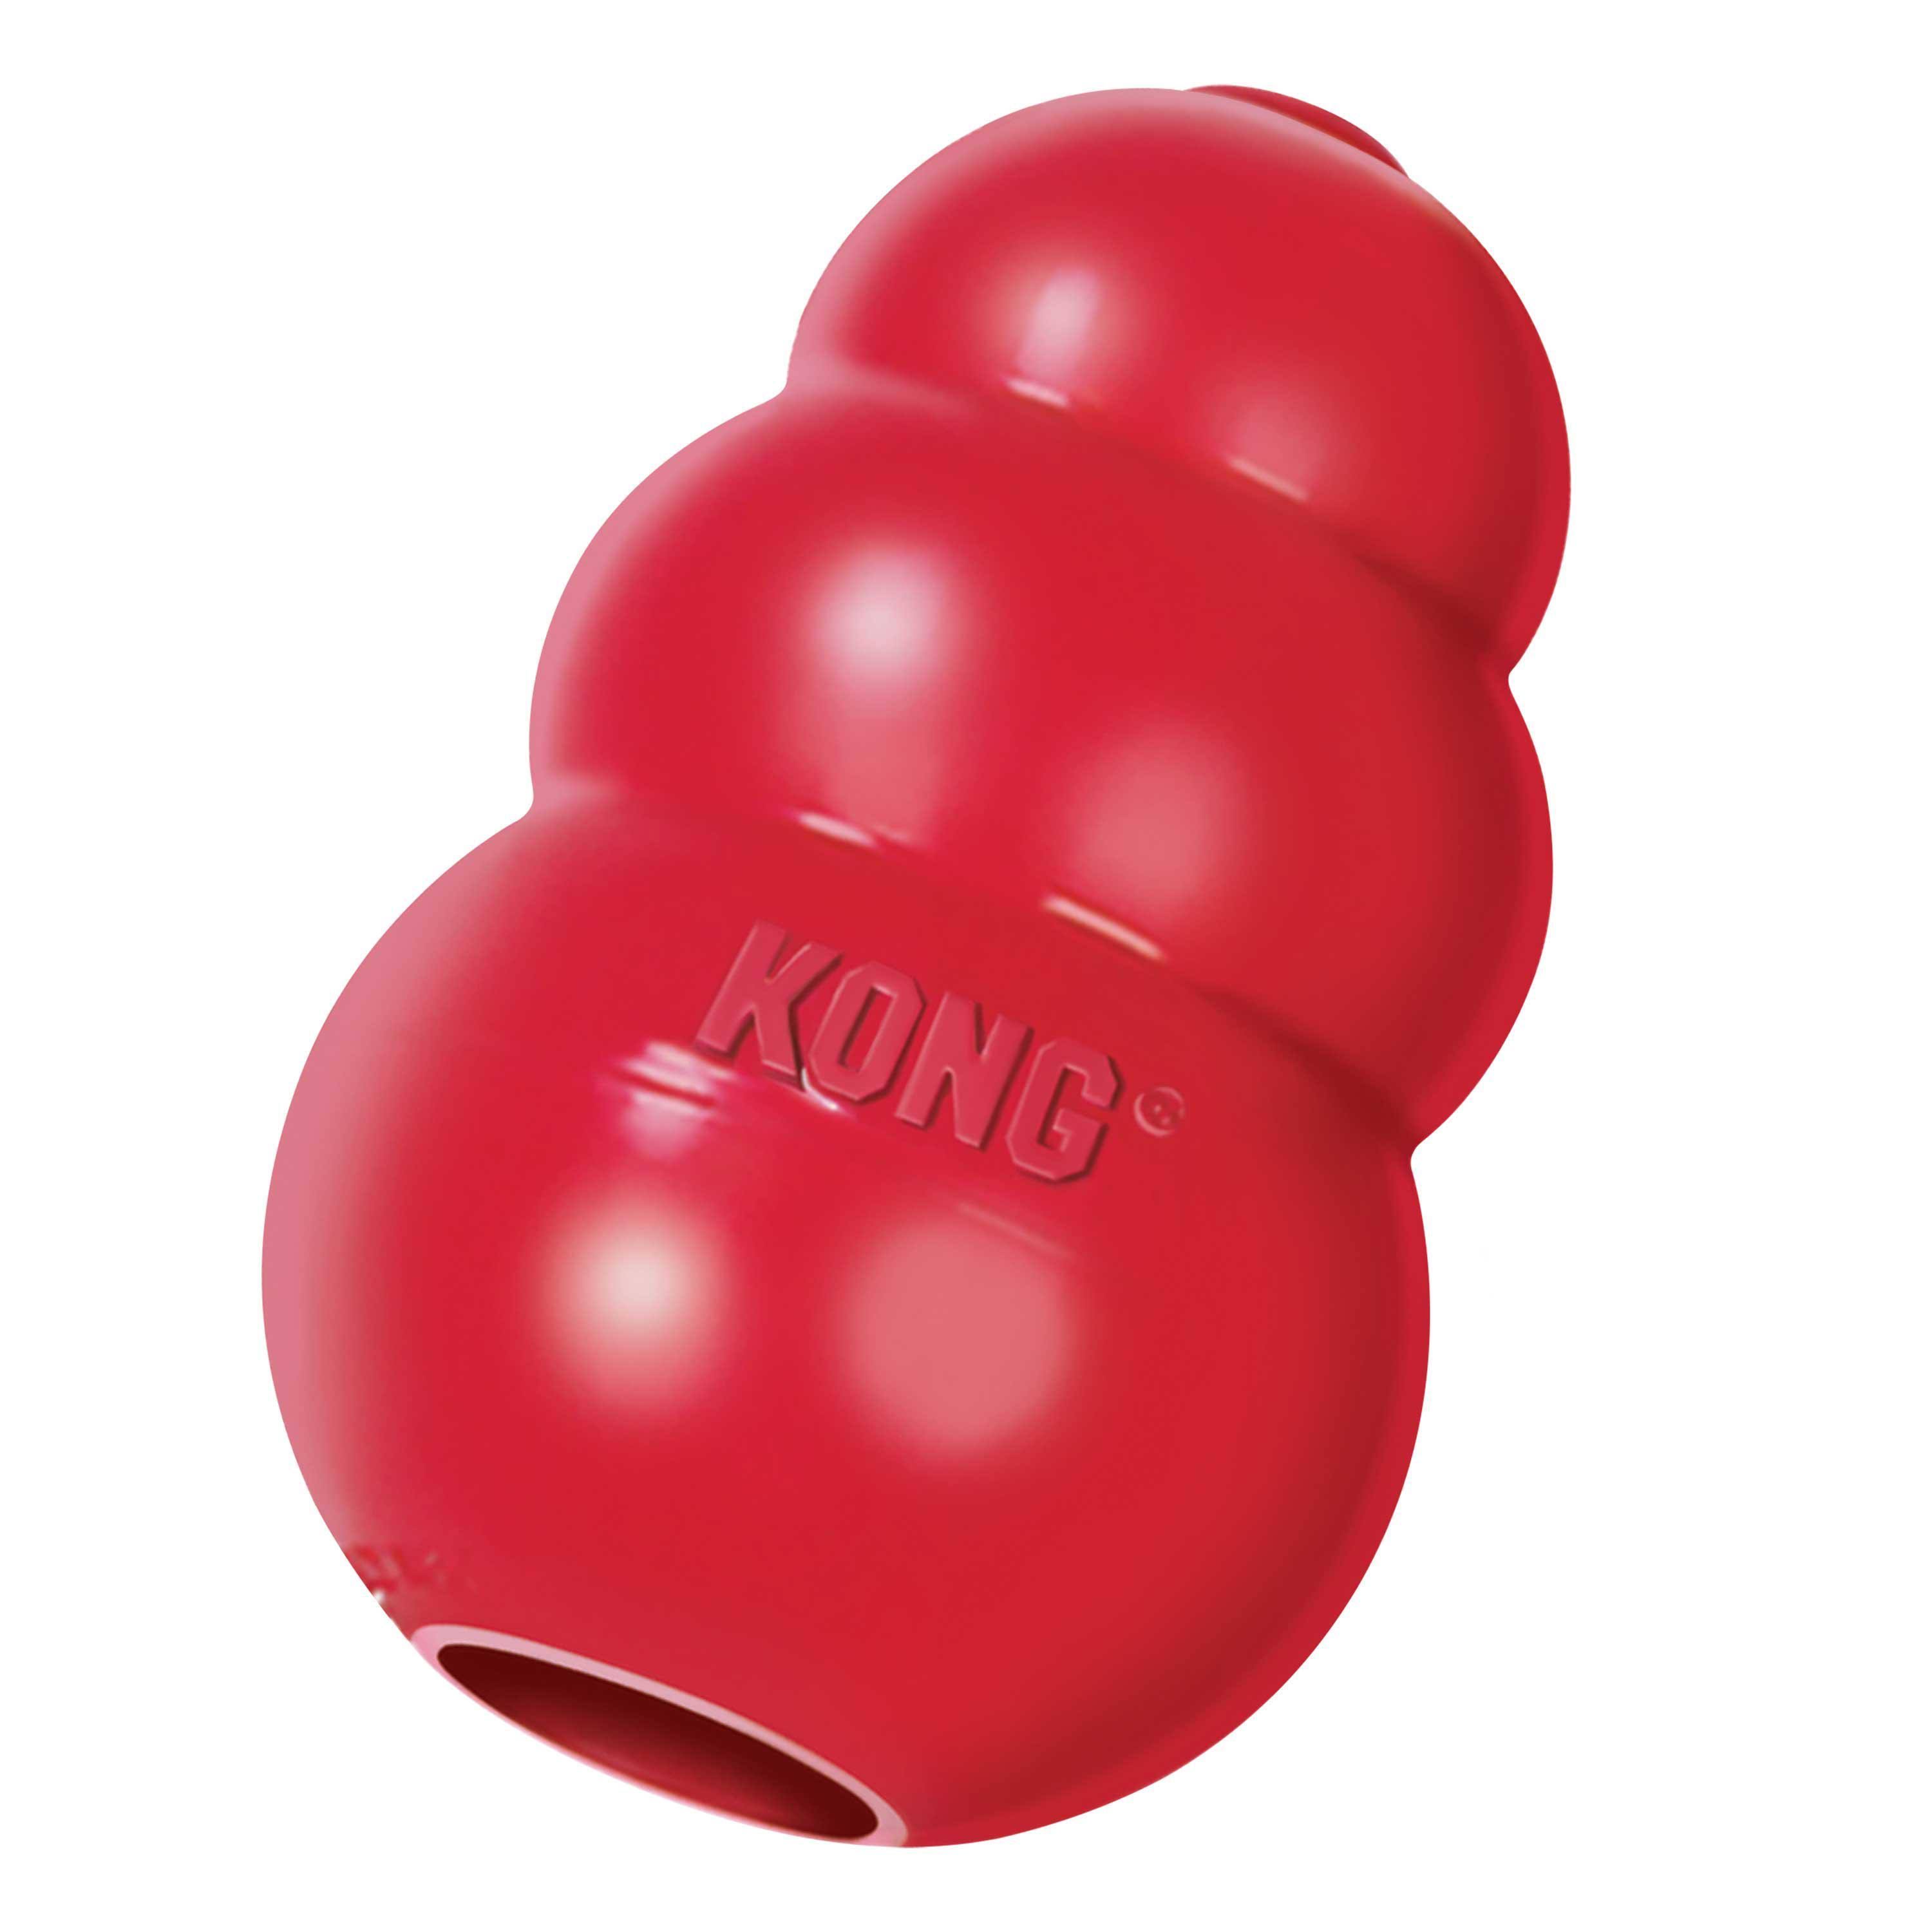 Kong Classic Dog Toy - Red, Medium